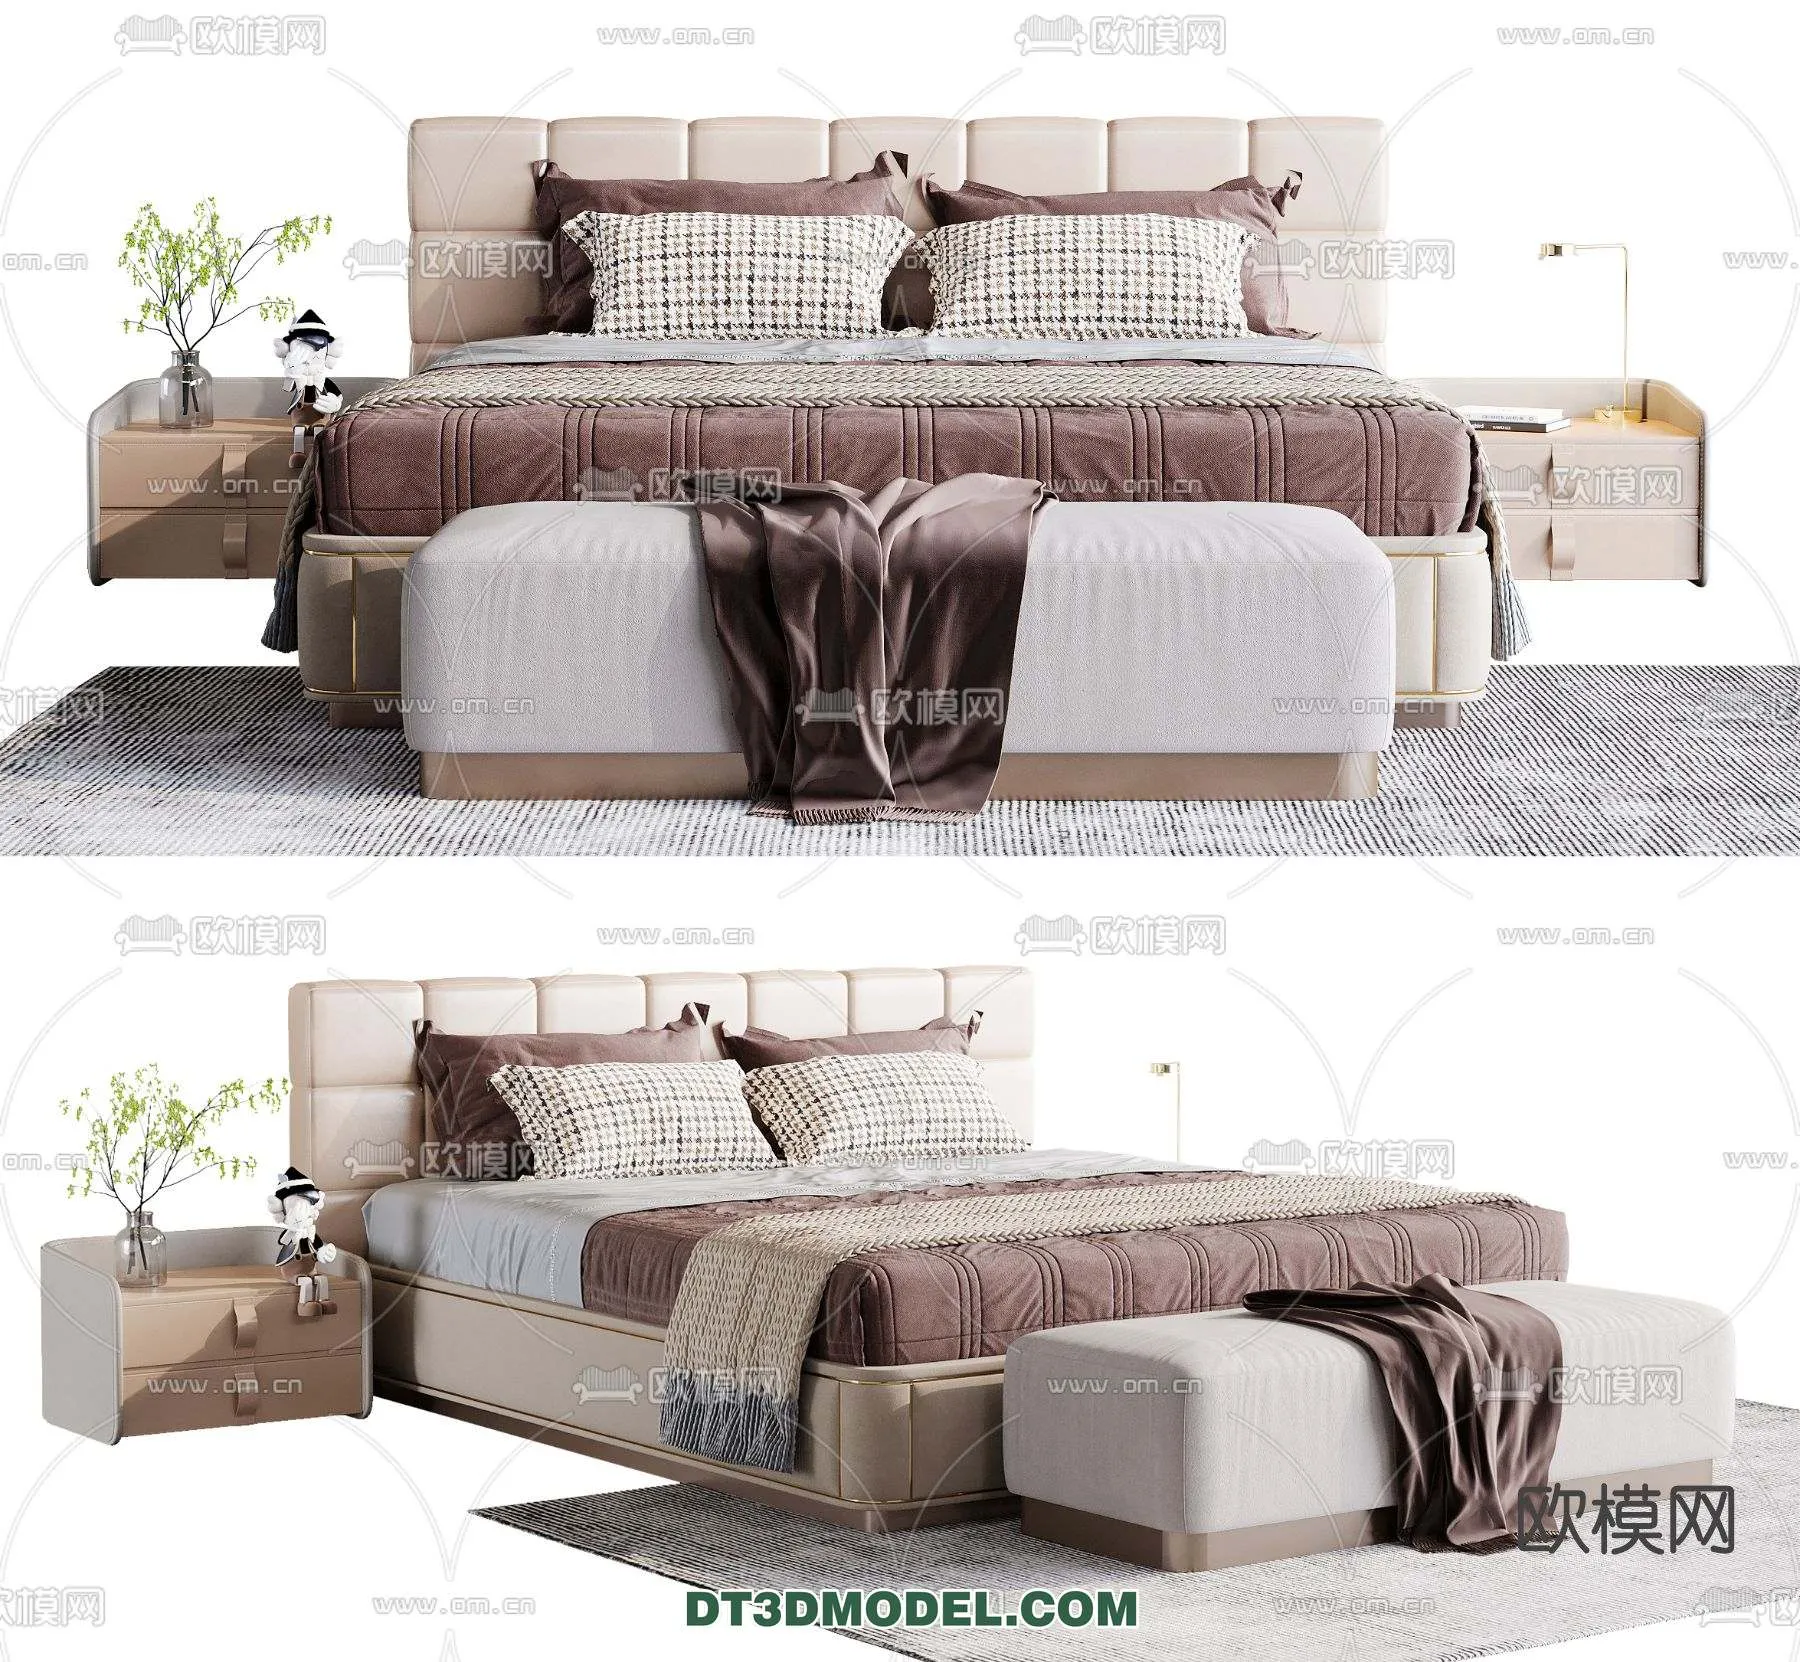 Double Bed 3D Models – 0030